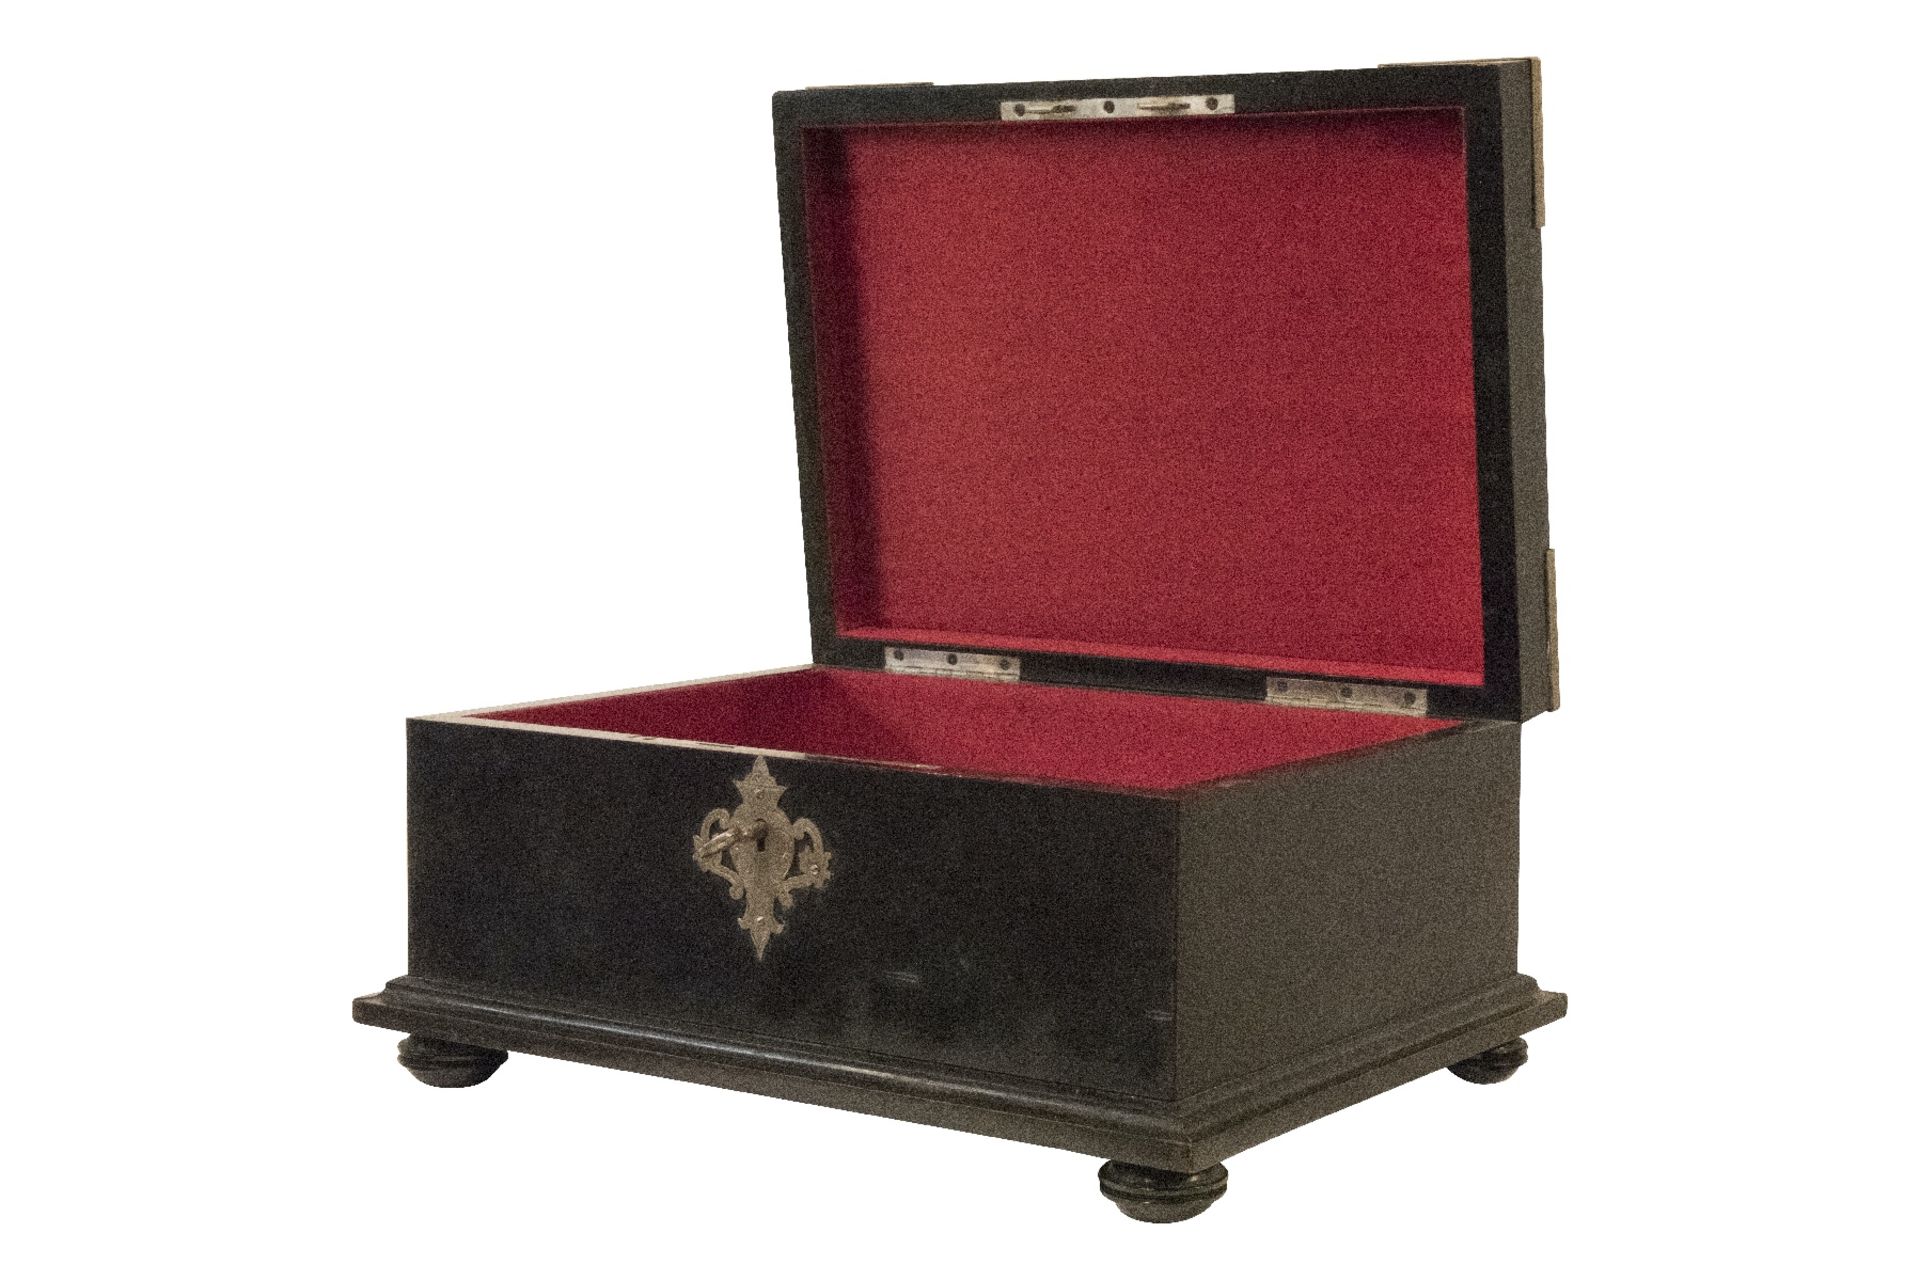 Holzschatulle mit Metallbeschlaegen | Wooden casket with metal fittings - Image 2 of 9